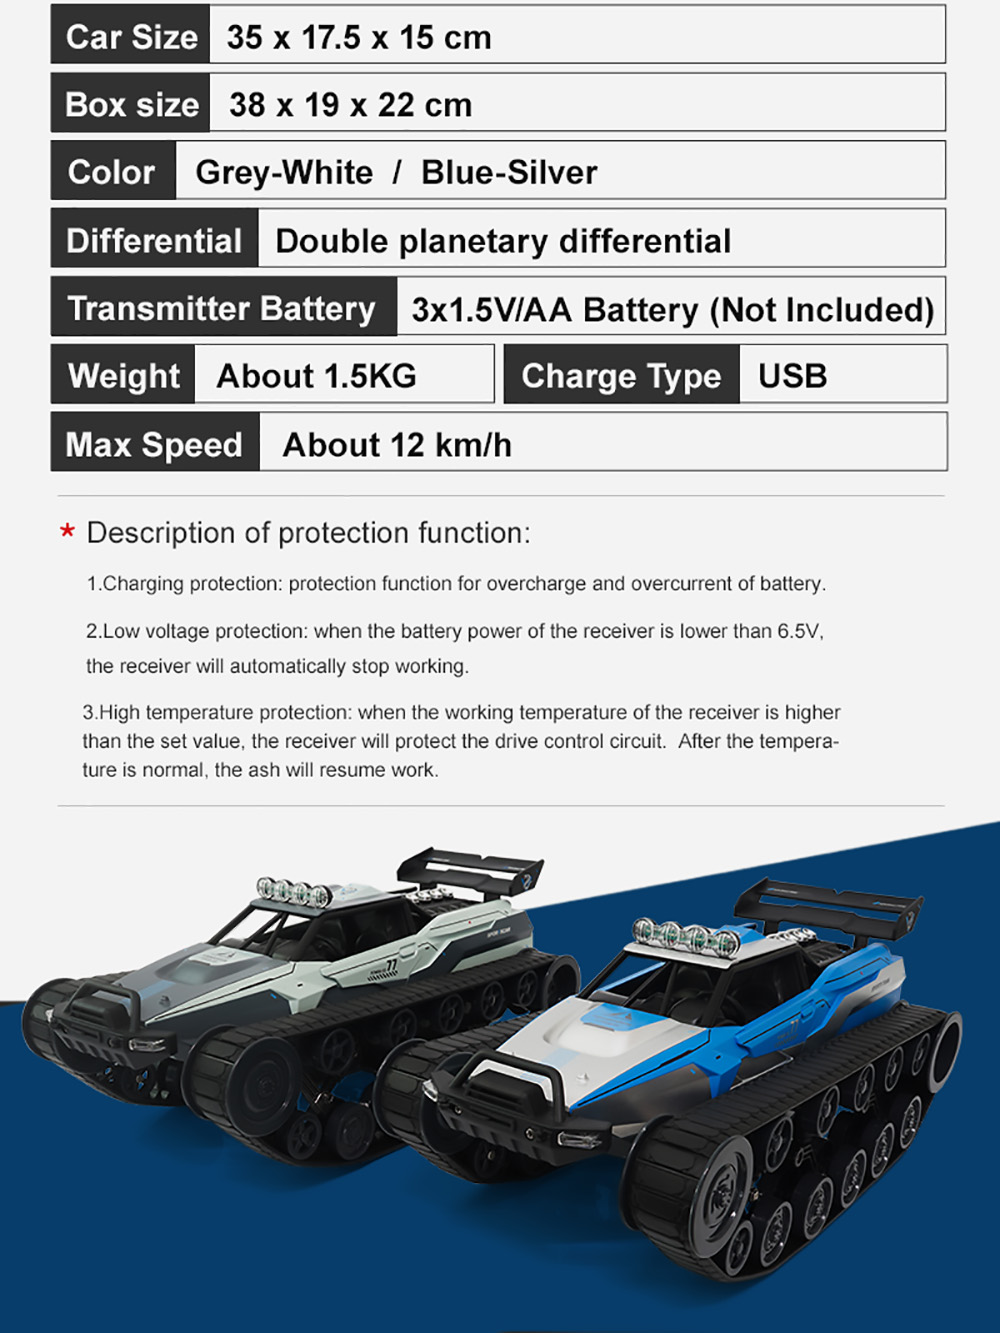 SG 1204 EV2 Upgraded 1/12 2.4G RC Tank 30km/h High Speed Drift Electric Arroy Vehicle RTR - Blue + Silver